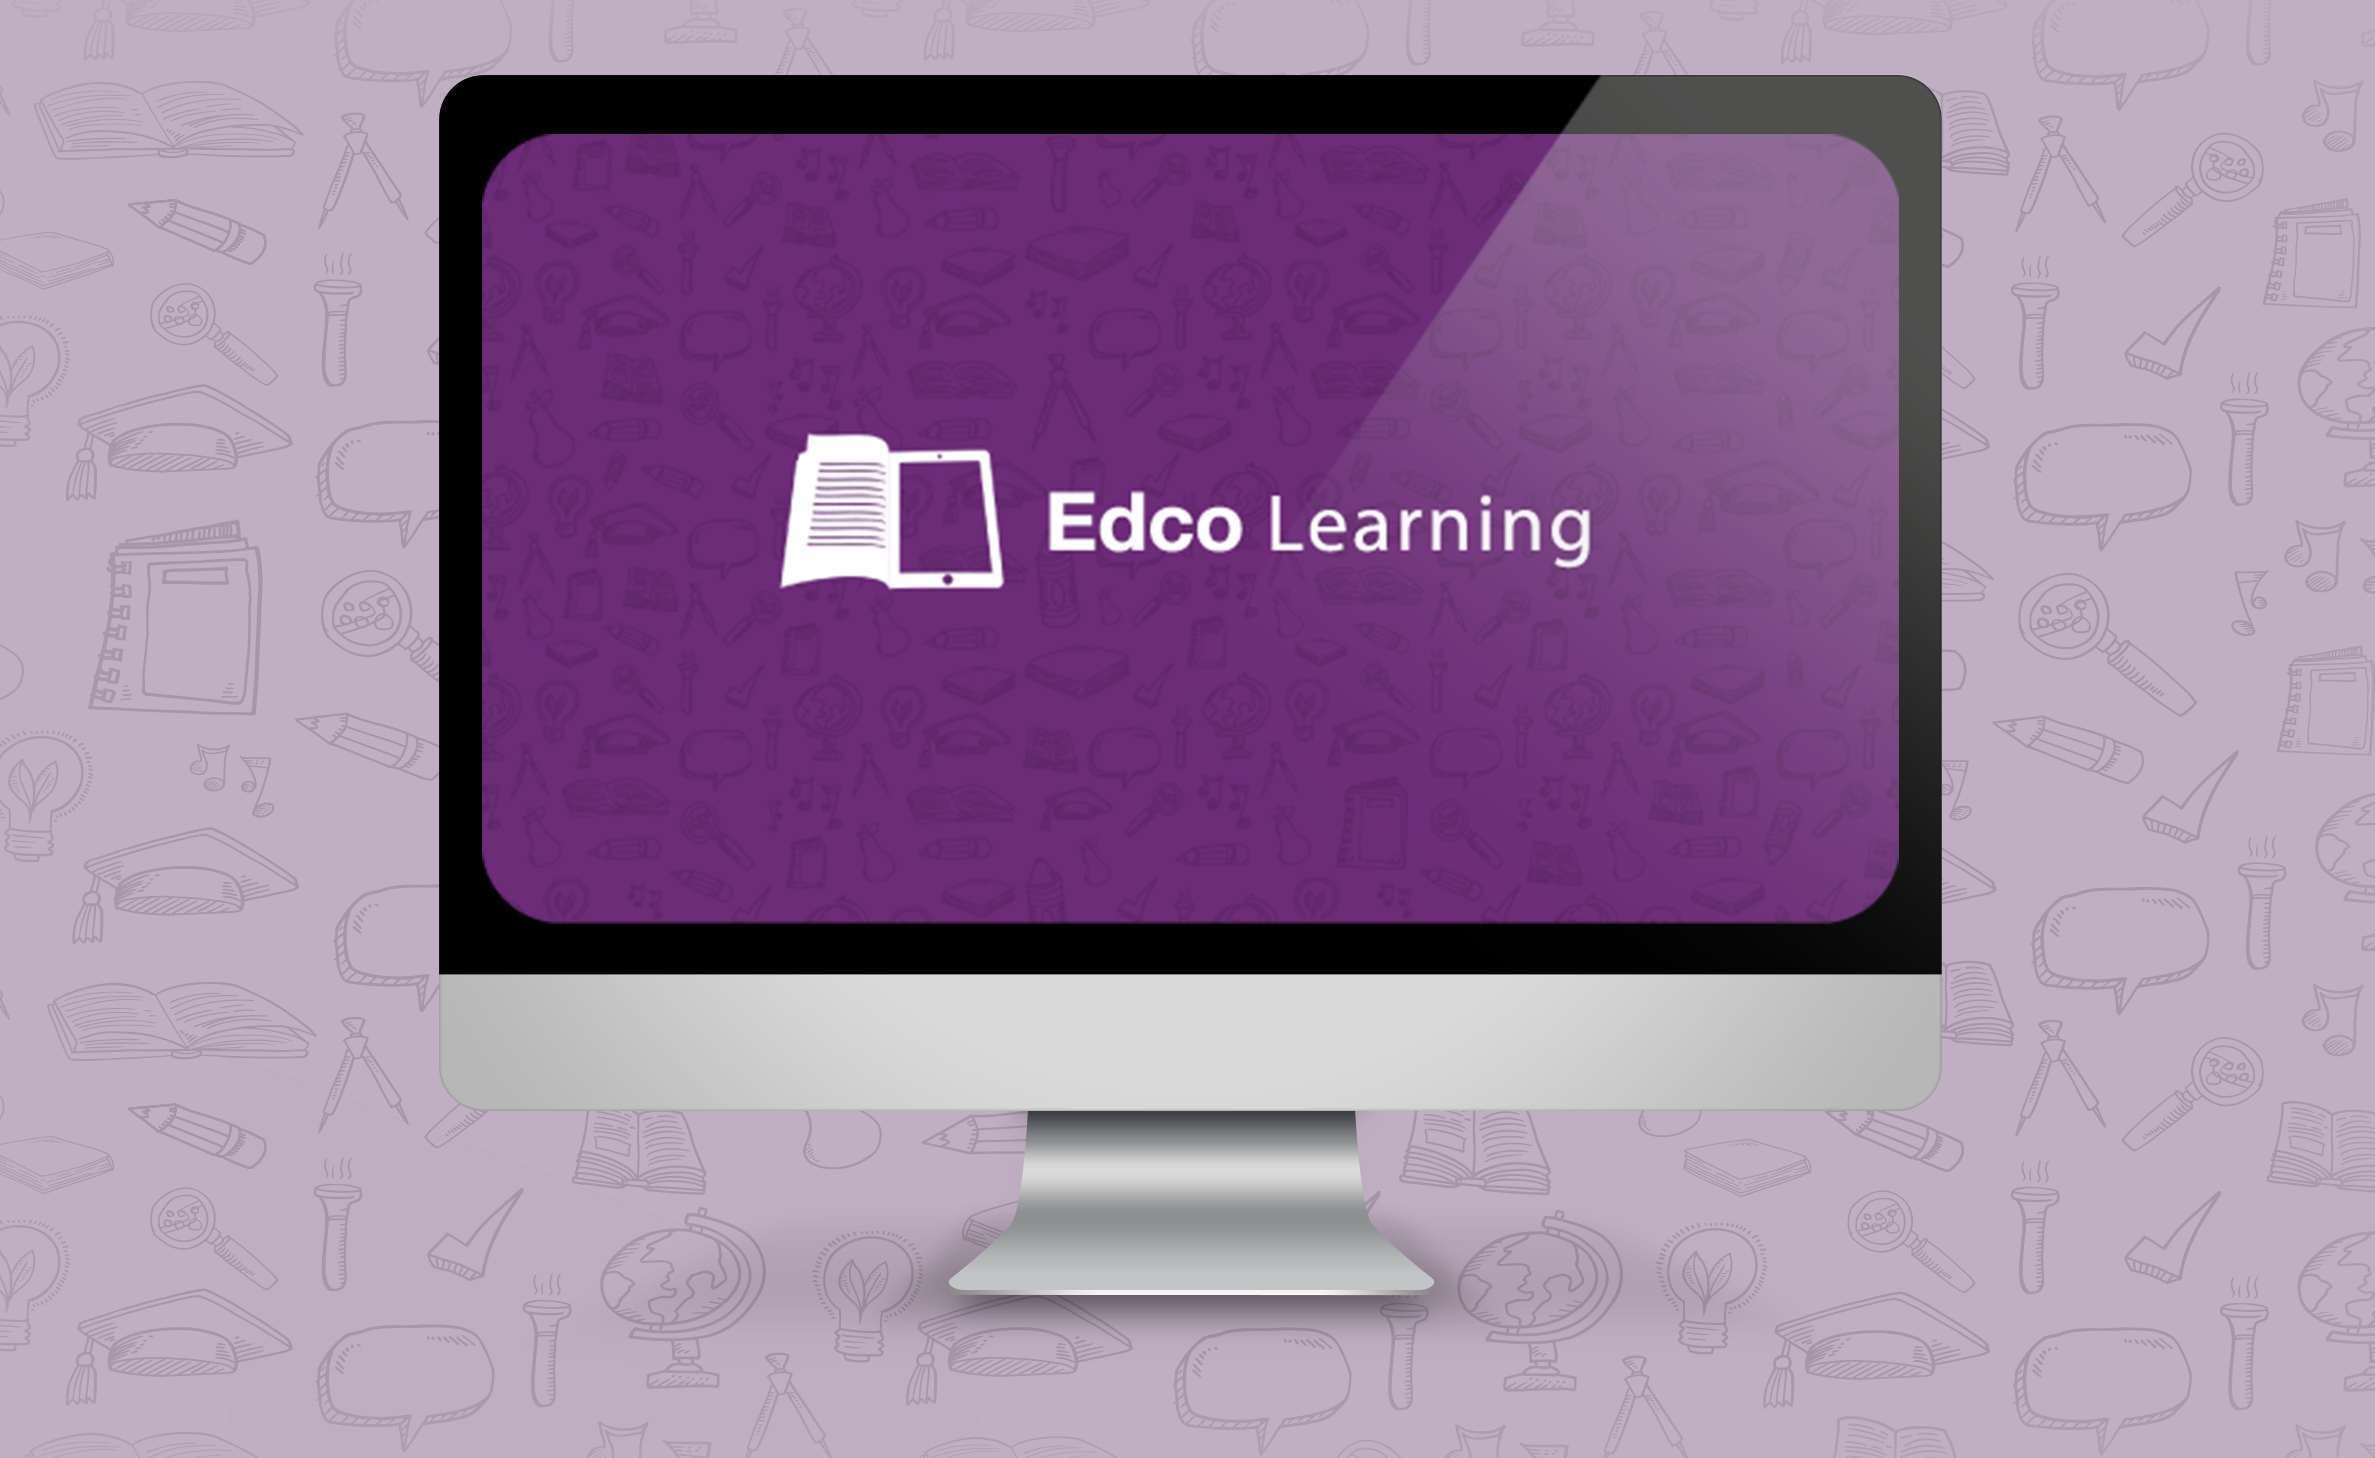 Edco Learning